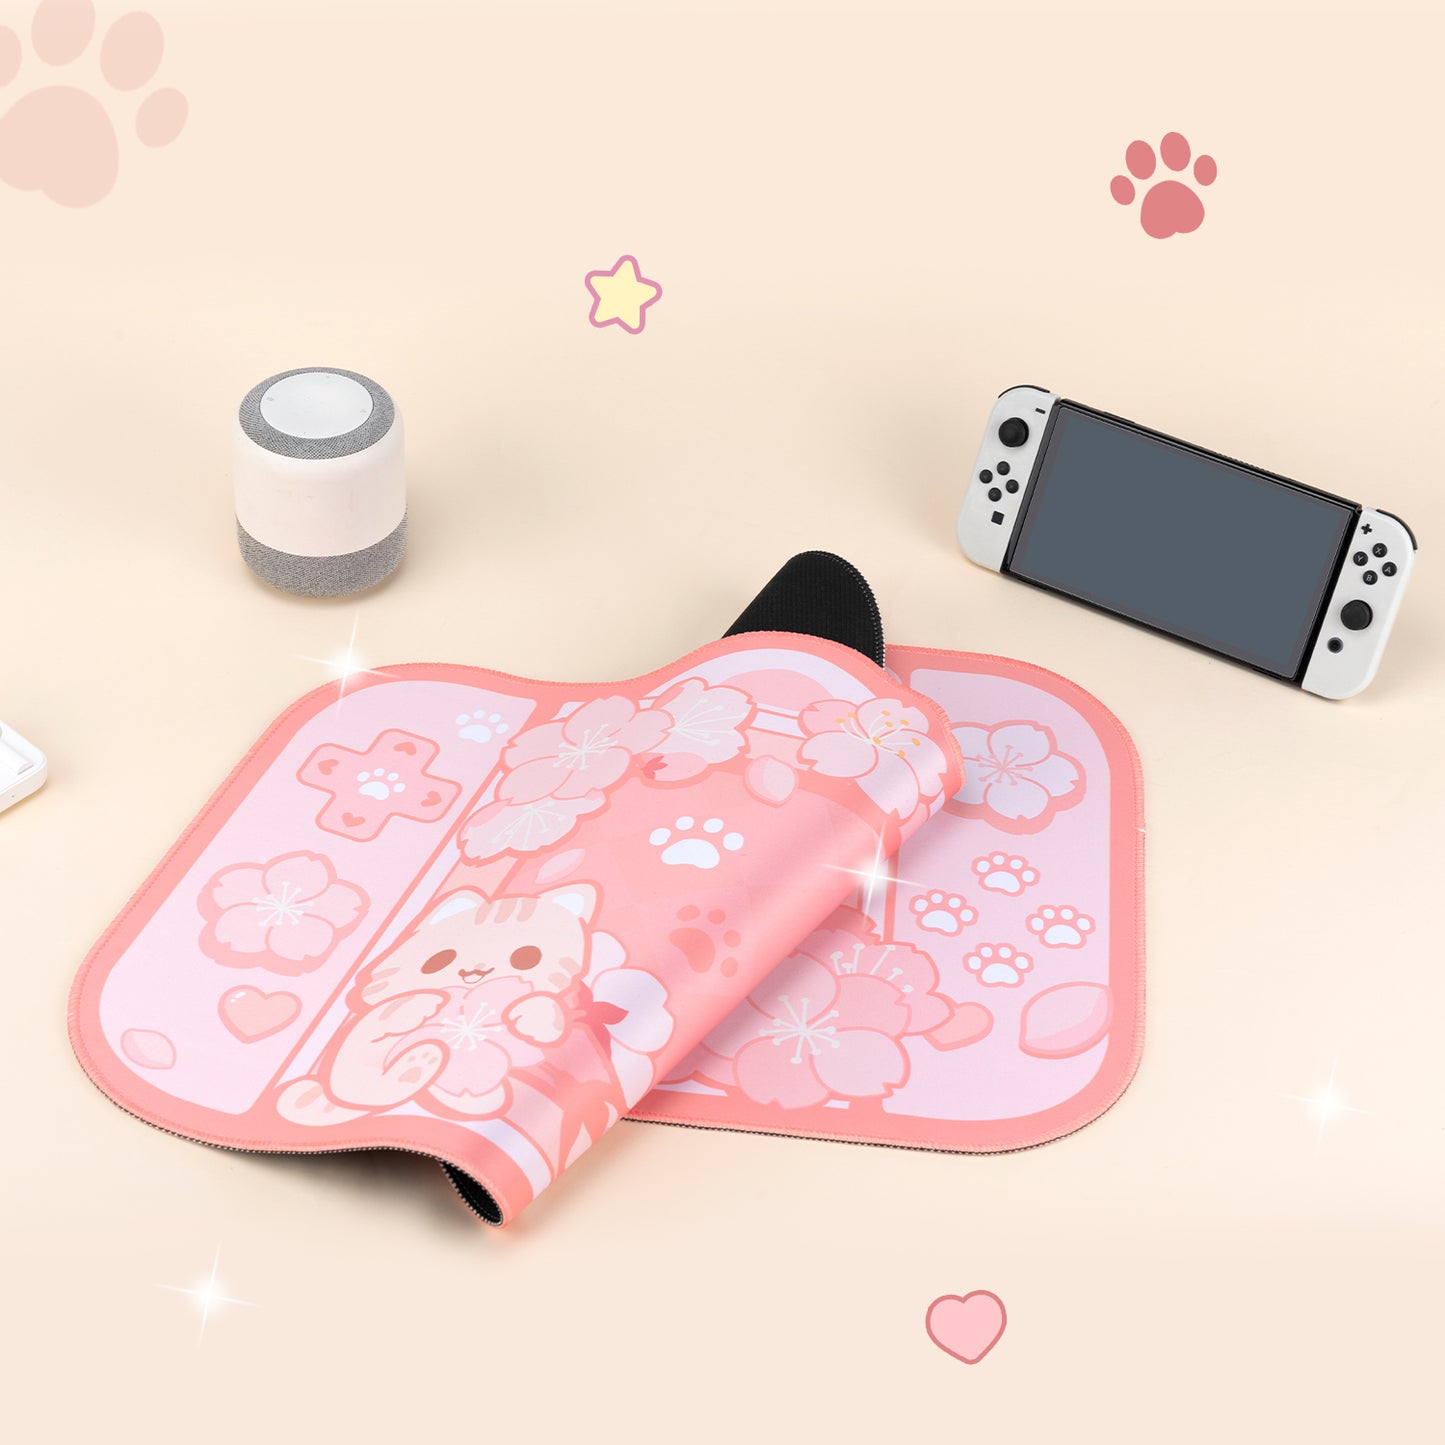 BlingKiyo Sakura Cat Large Mouse Pad / Desk Mat